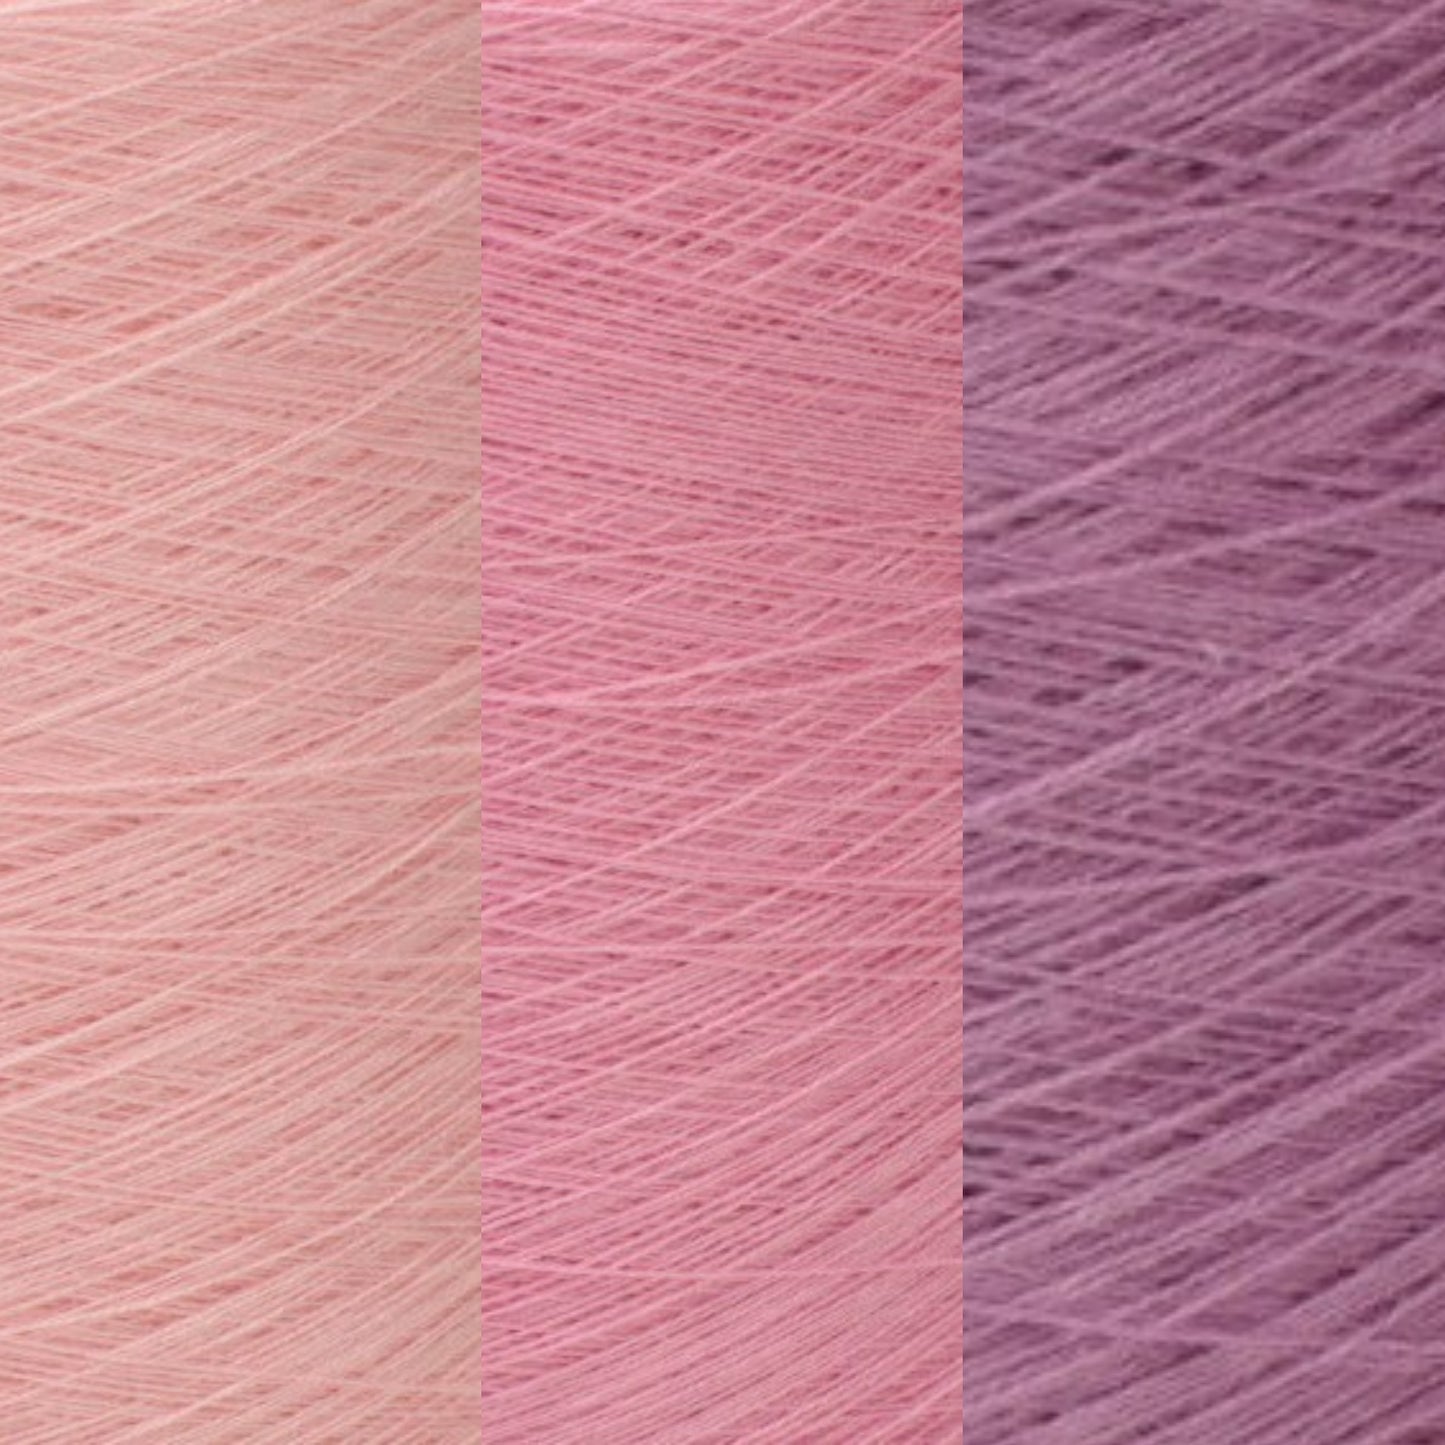 Gradient ombre yarn cake colour combination C328